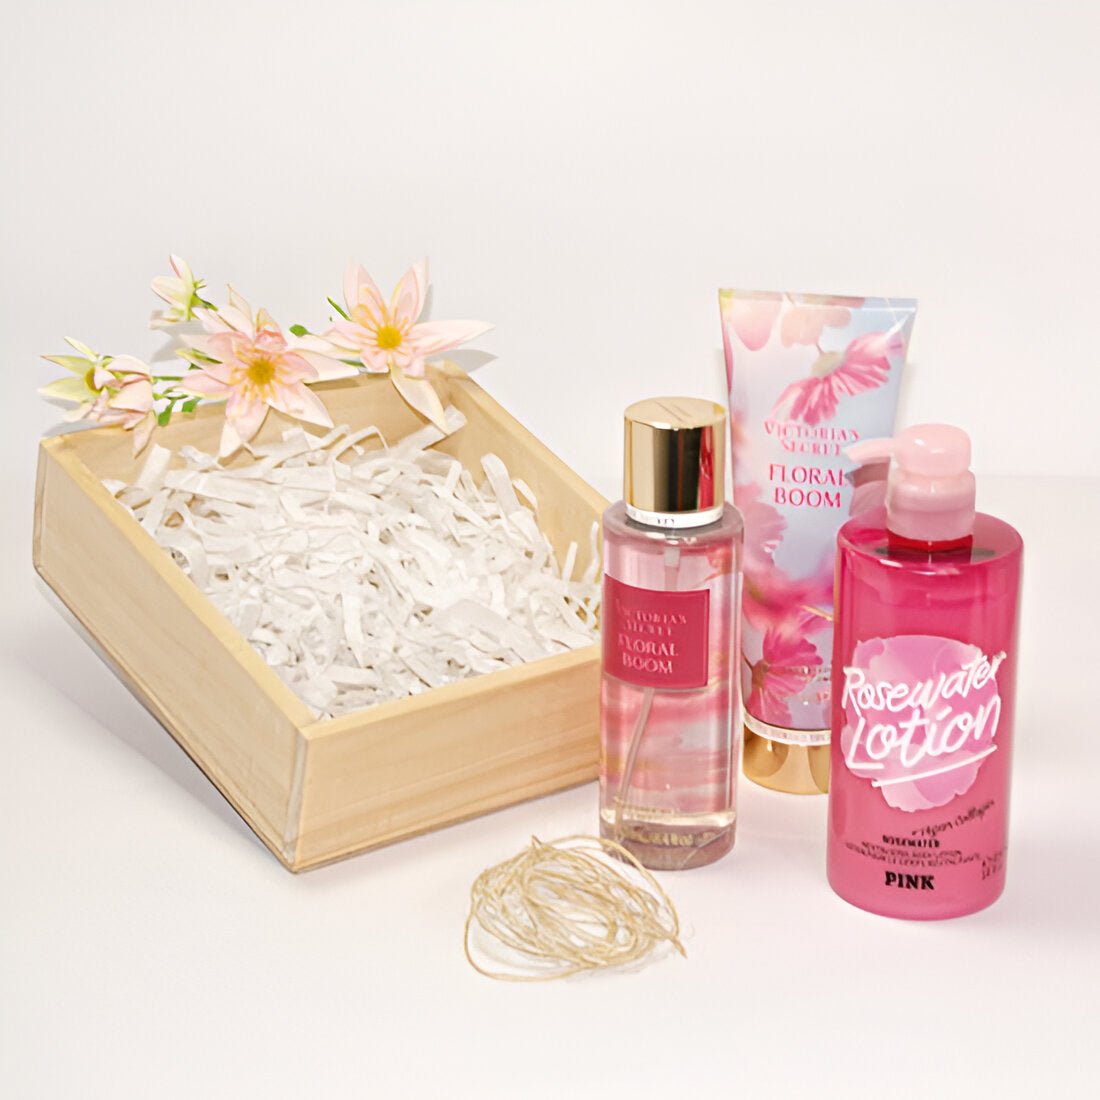 Victoria's Secret Floral Boom Body Mist | My Perfume Shop Australia